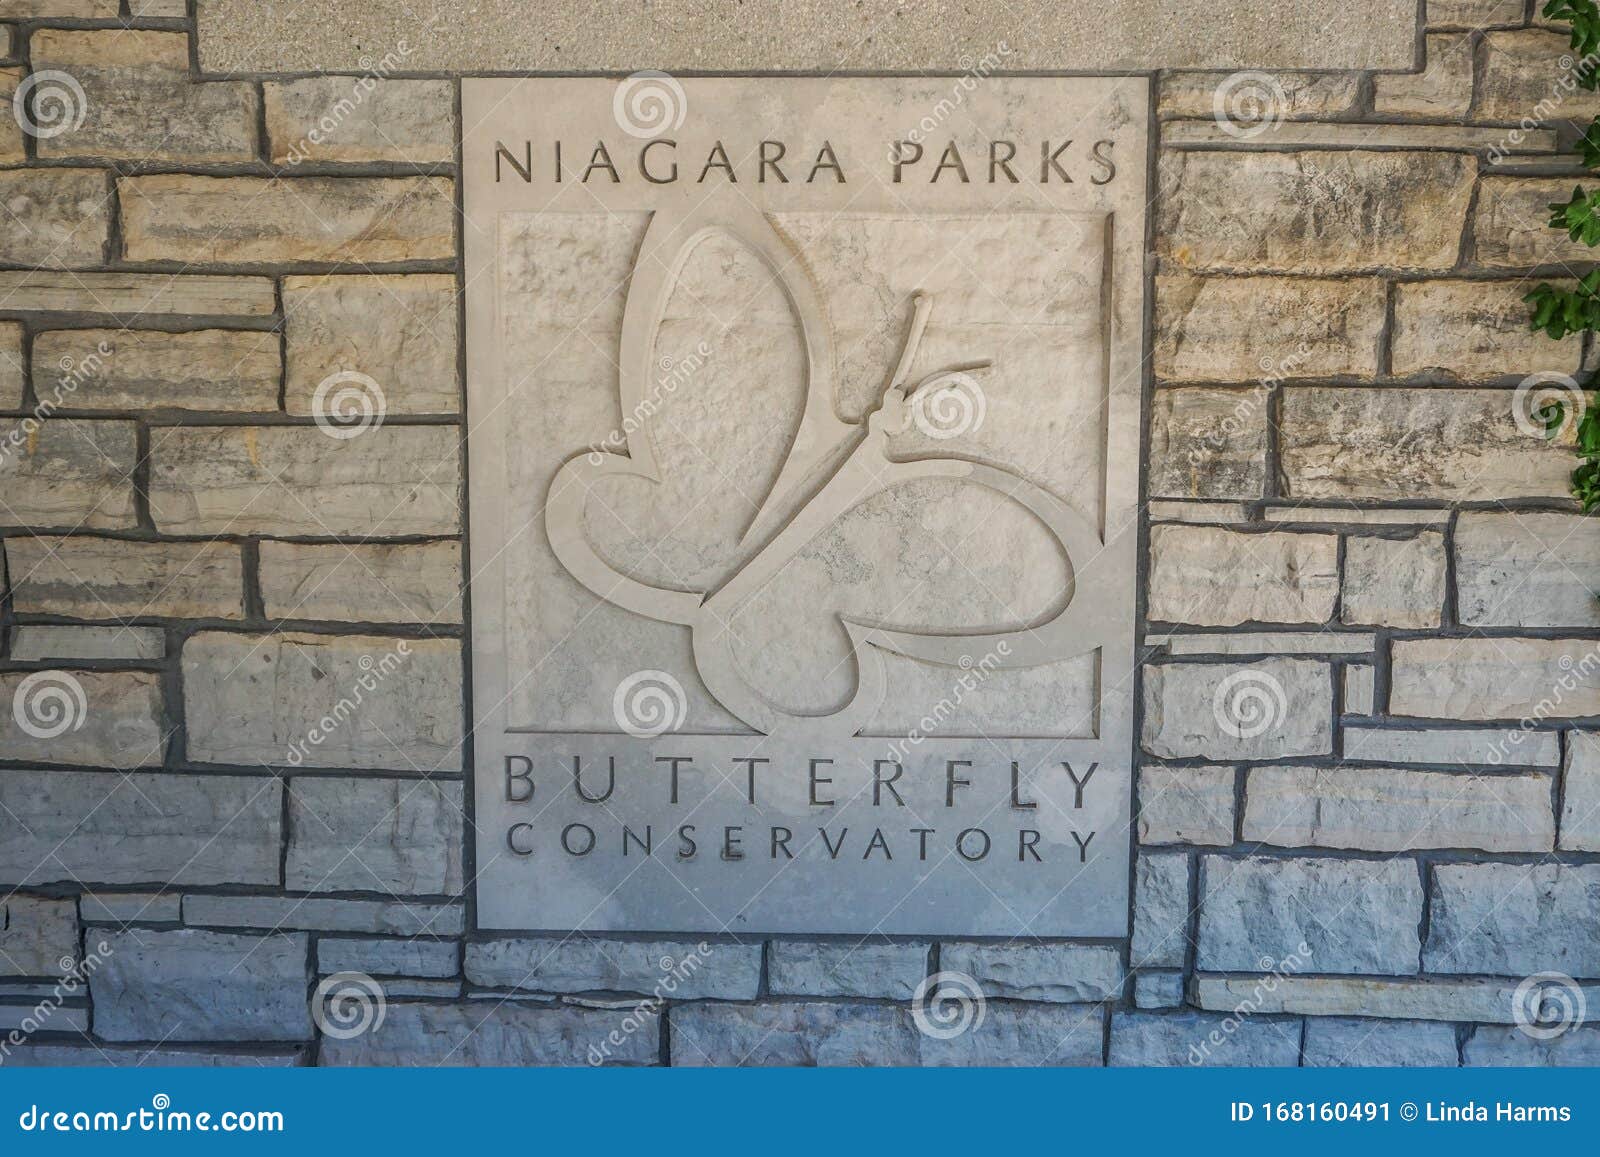 niagara-on-the-lake, ontario, canada: the niagara parks butterfly conservatory